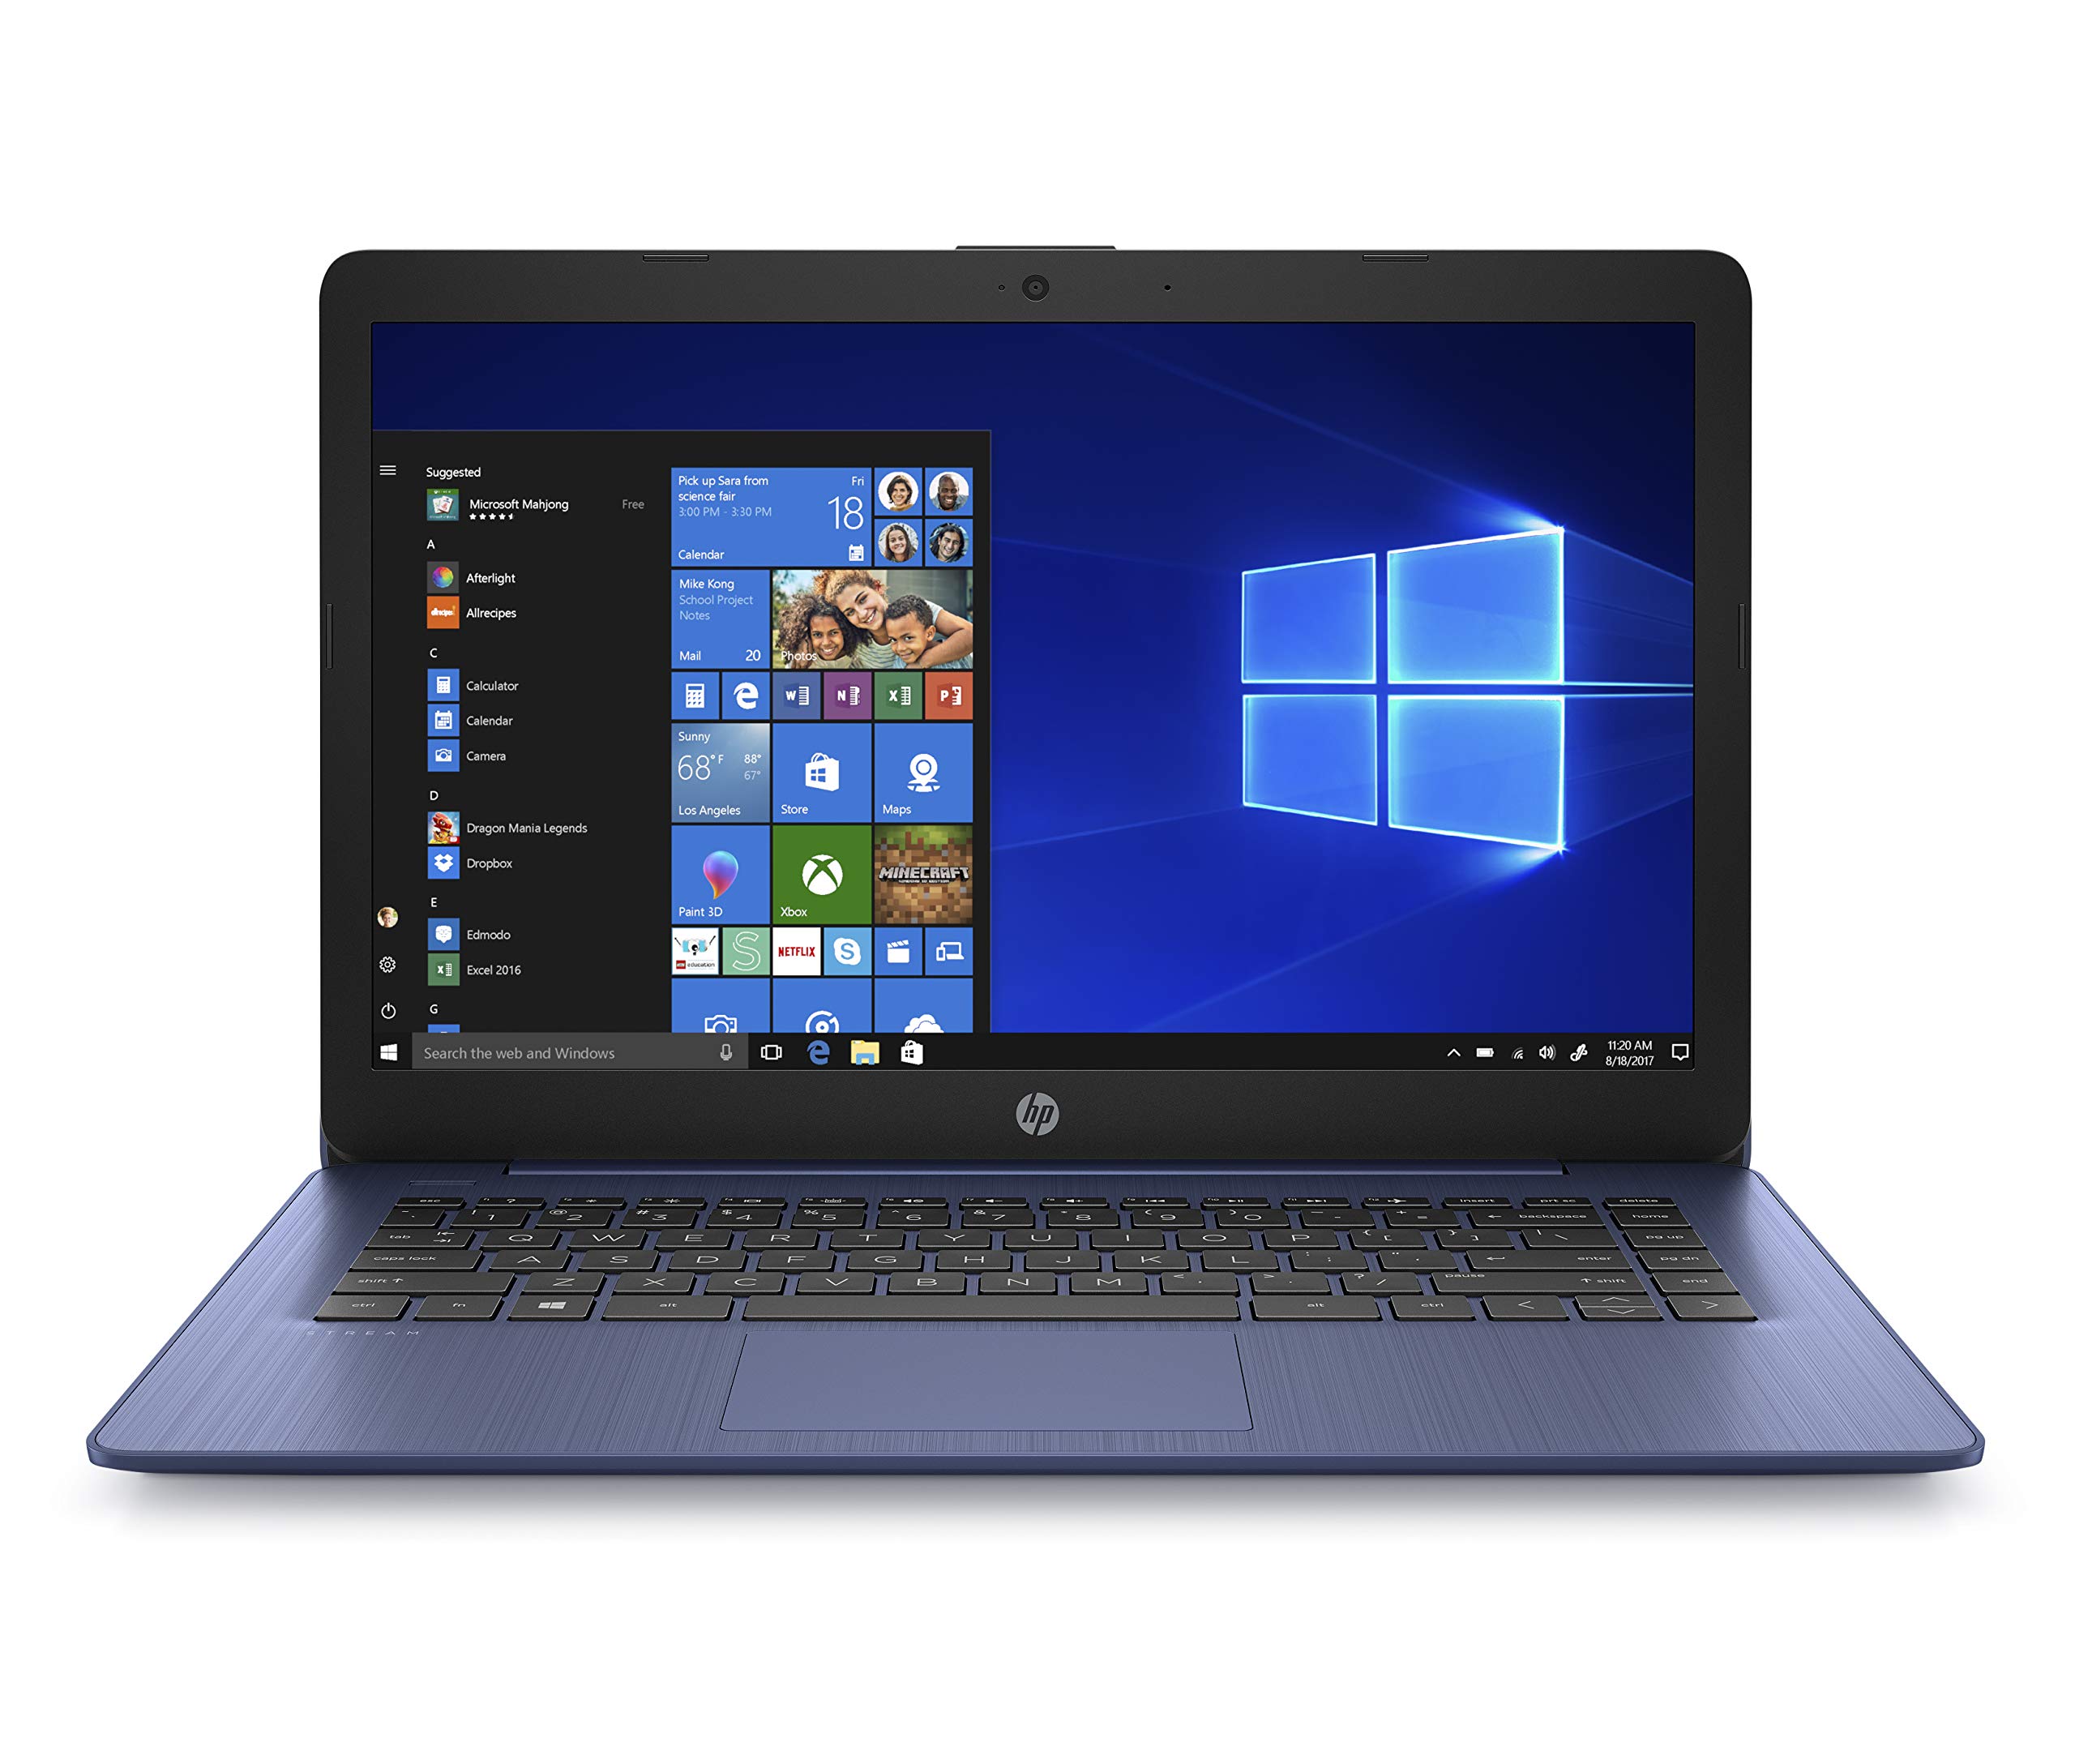 Mua HP Stream 14-inch Laptop, Intel Celeron N4000, 4 GB RAM, 64 GB eMMC,  Windows 10 Home in S Mode With Office 365 Personal For 1 Year (14-cb185nr,  Royal Blue) trên Amazon Mỹ chính hãng 2023 | Fado